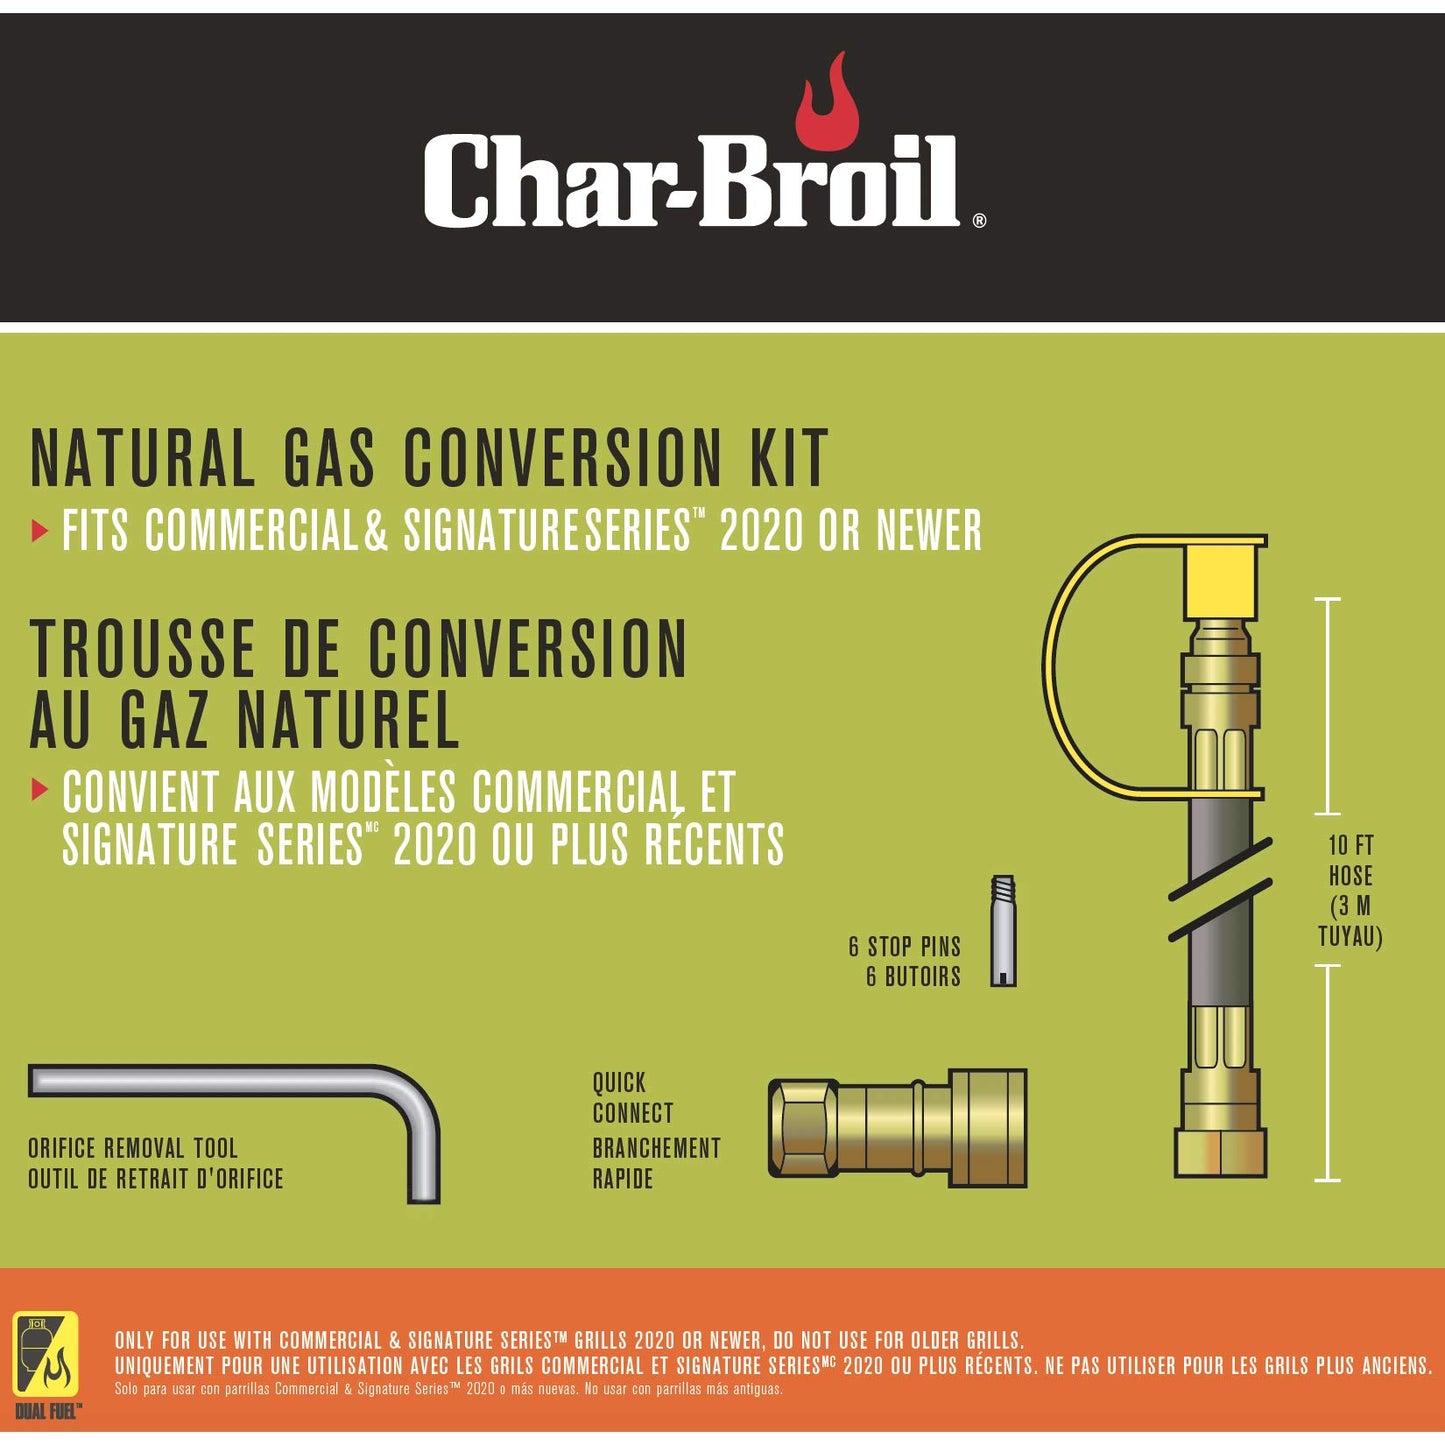 CHAR-BROIL NATURAL GAS CONVERSION KIT 2020